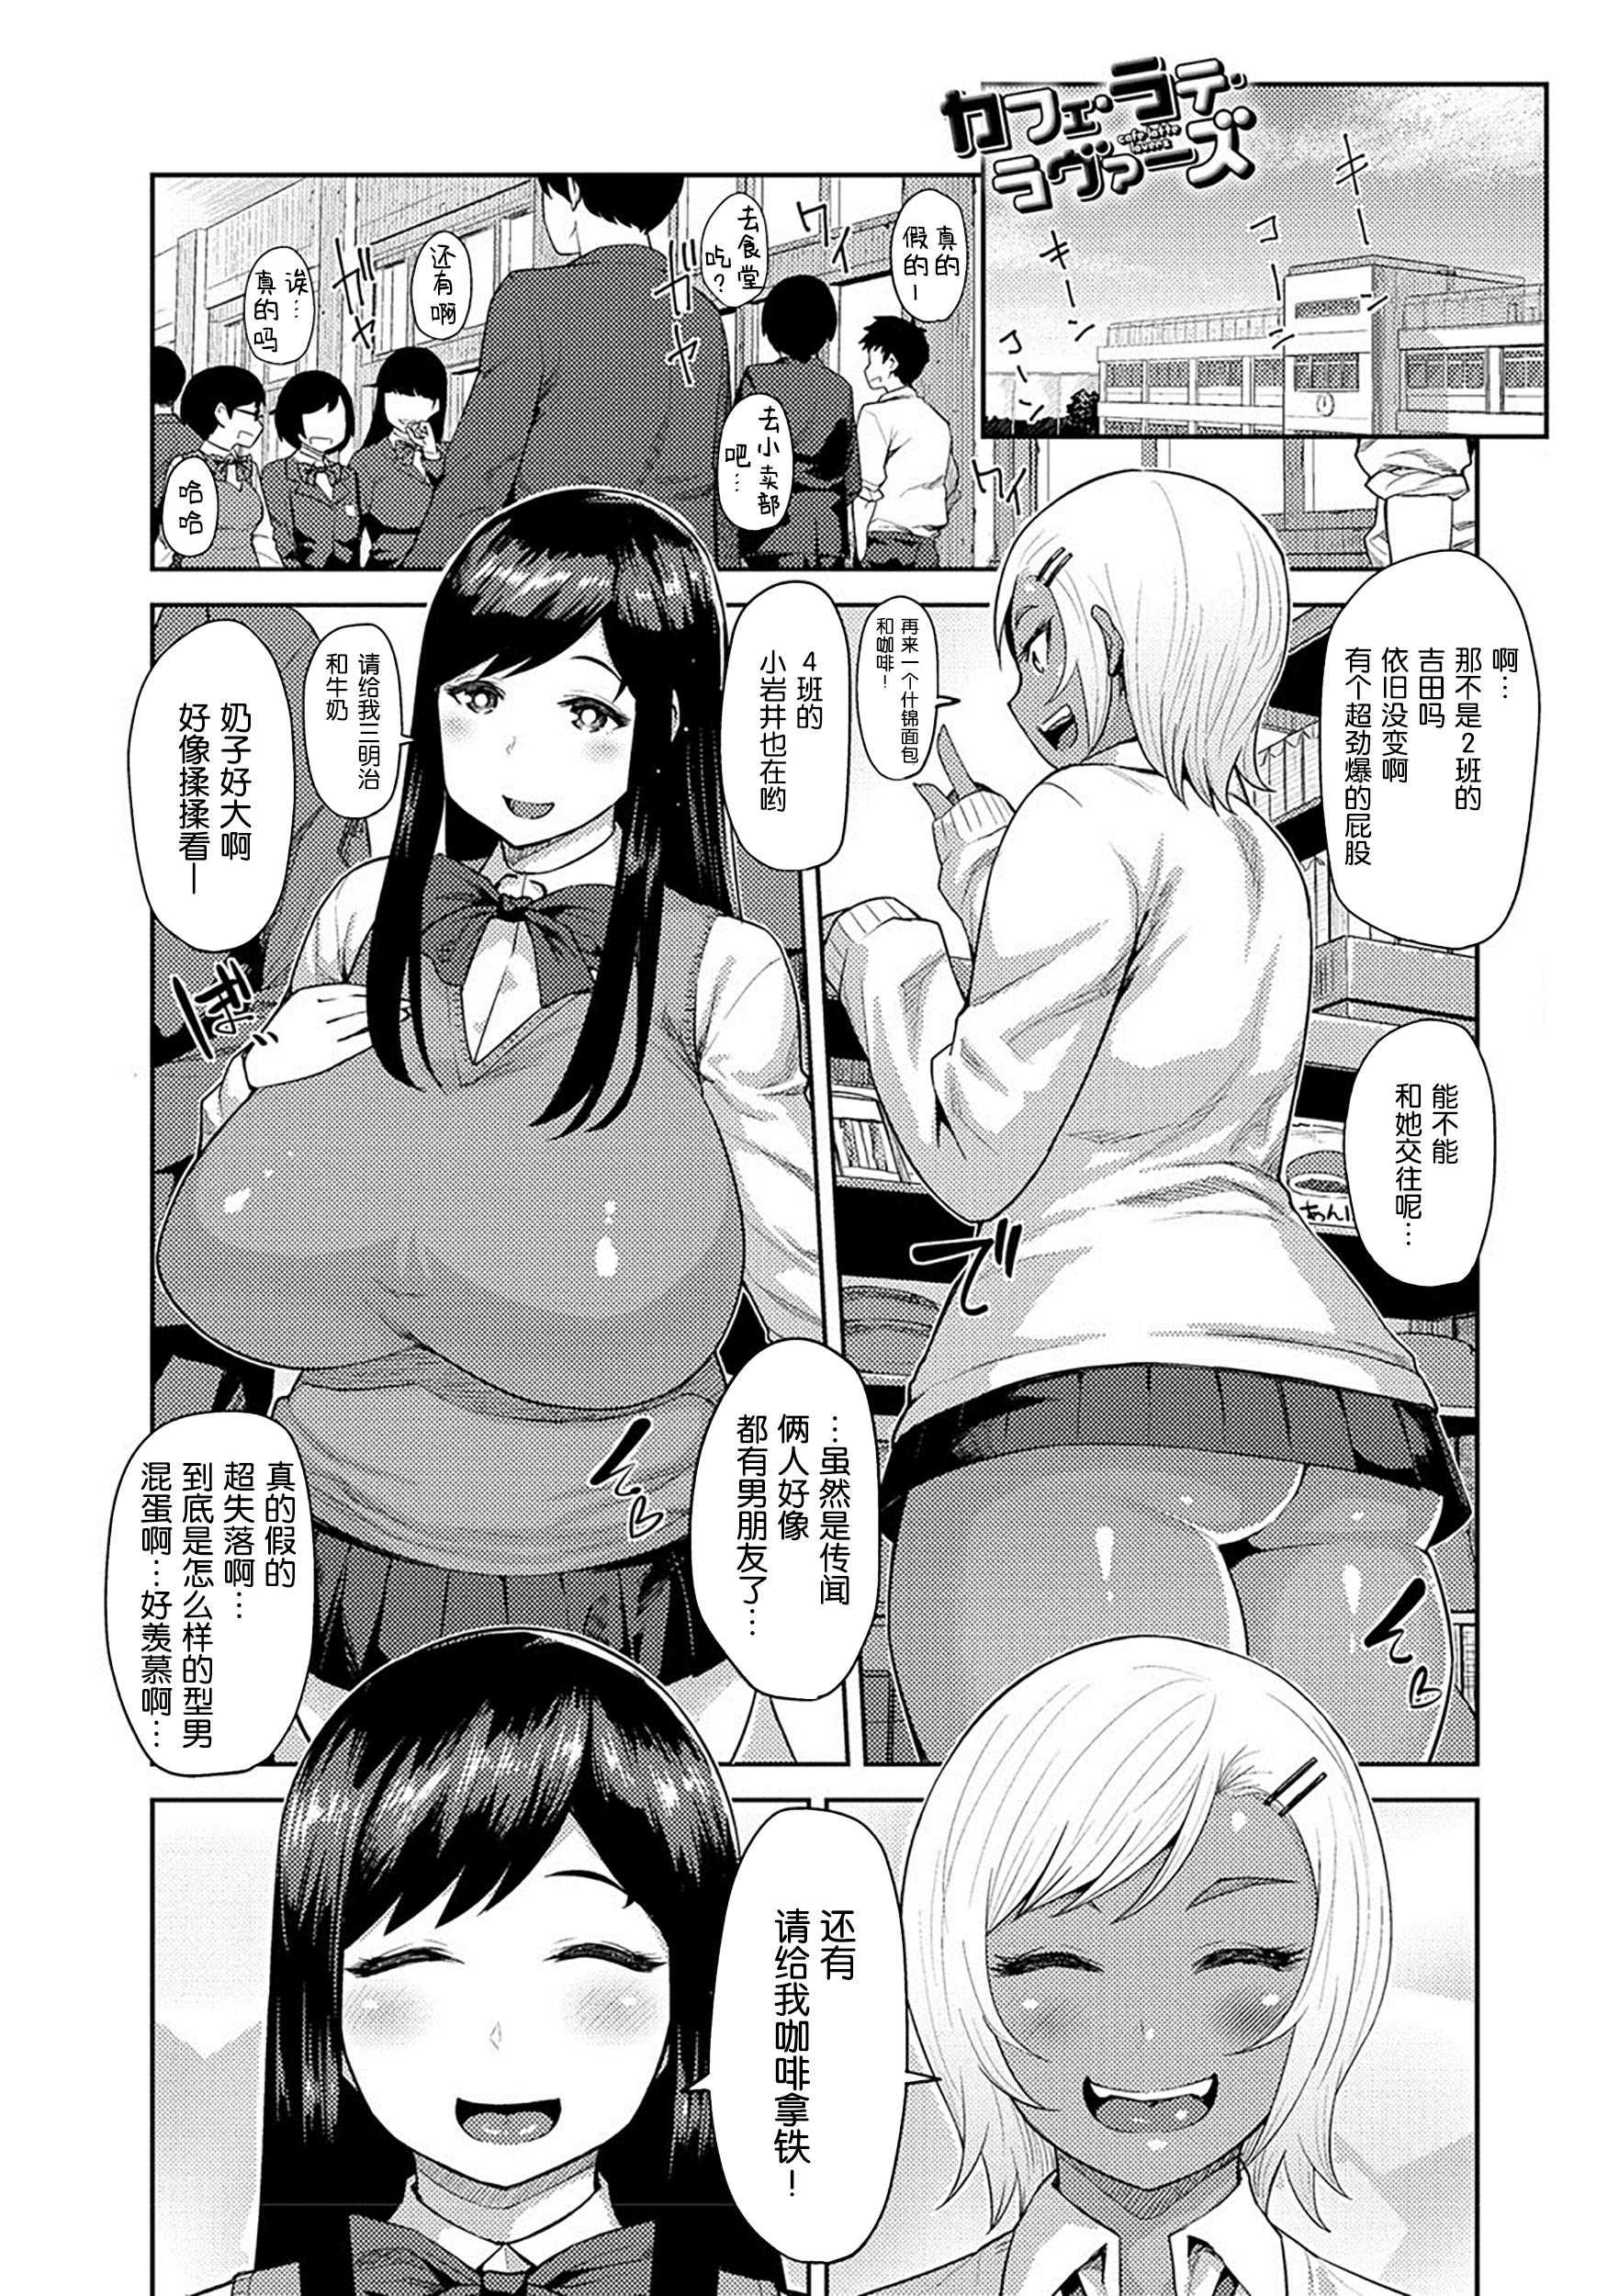 Muchi Lover Page 7 Of 220 hentai manga, Muchi Lover Page 7 Of 220 hentai co...